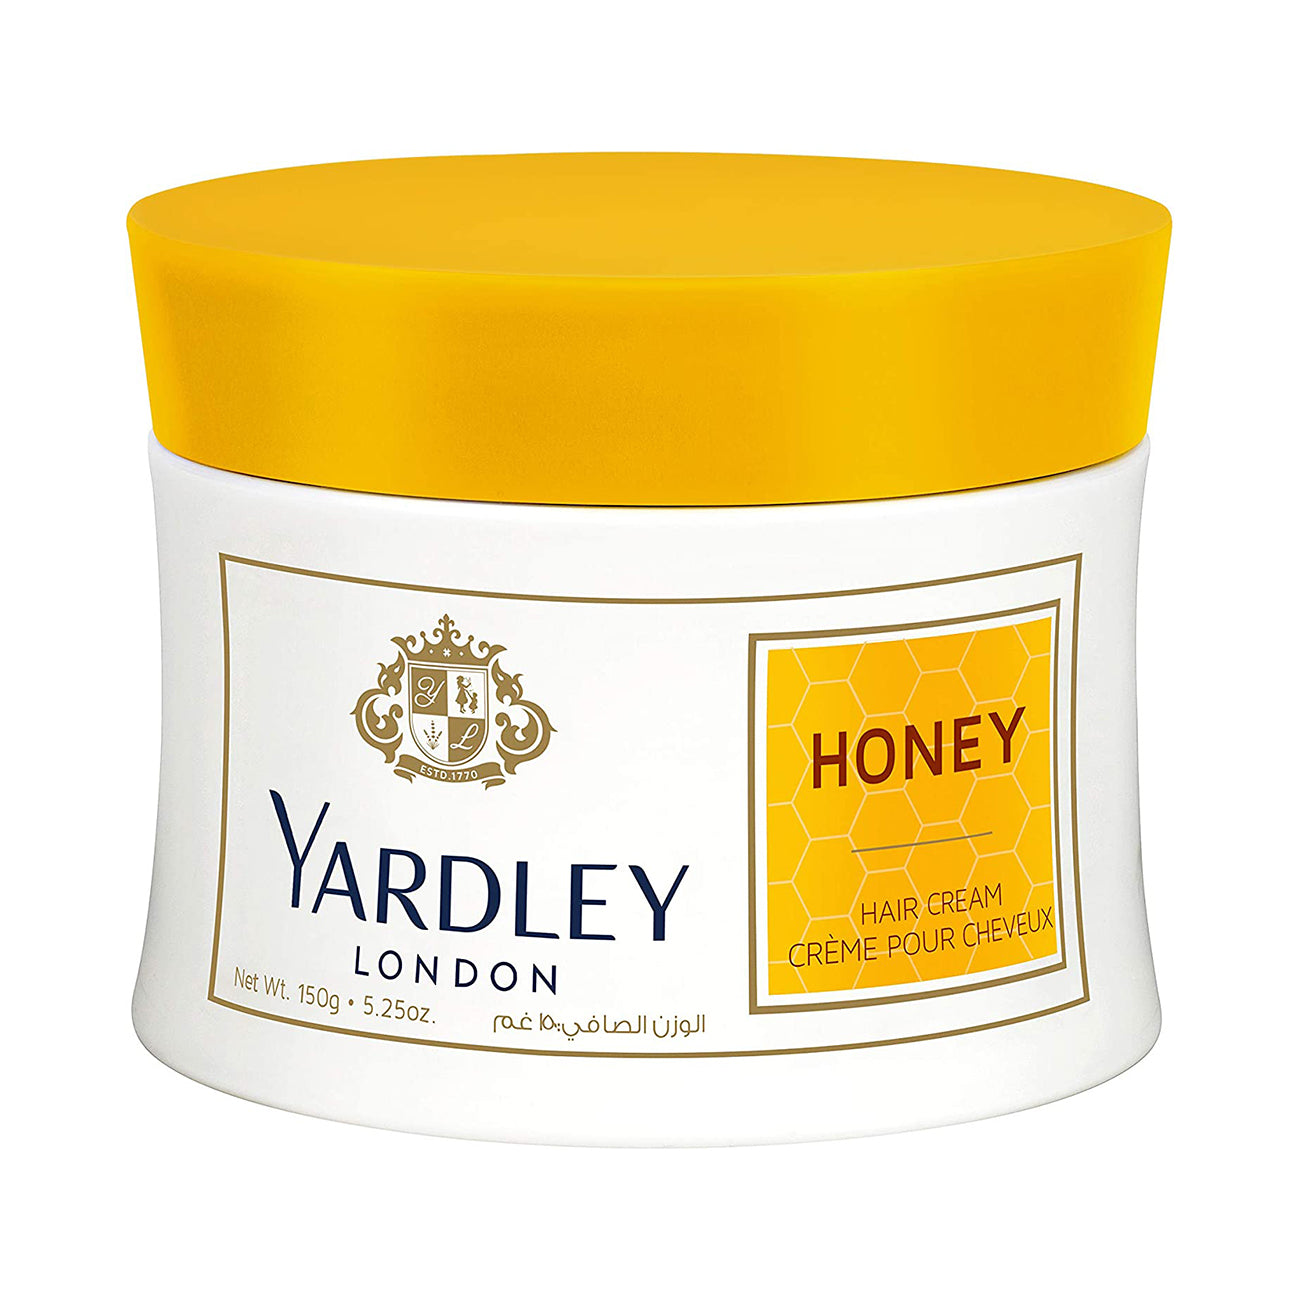 Yardley Honey Hair Cream, For Moisturising And Grooming All Day Long - 150 Gm